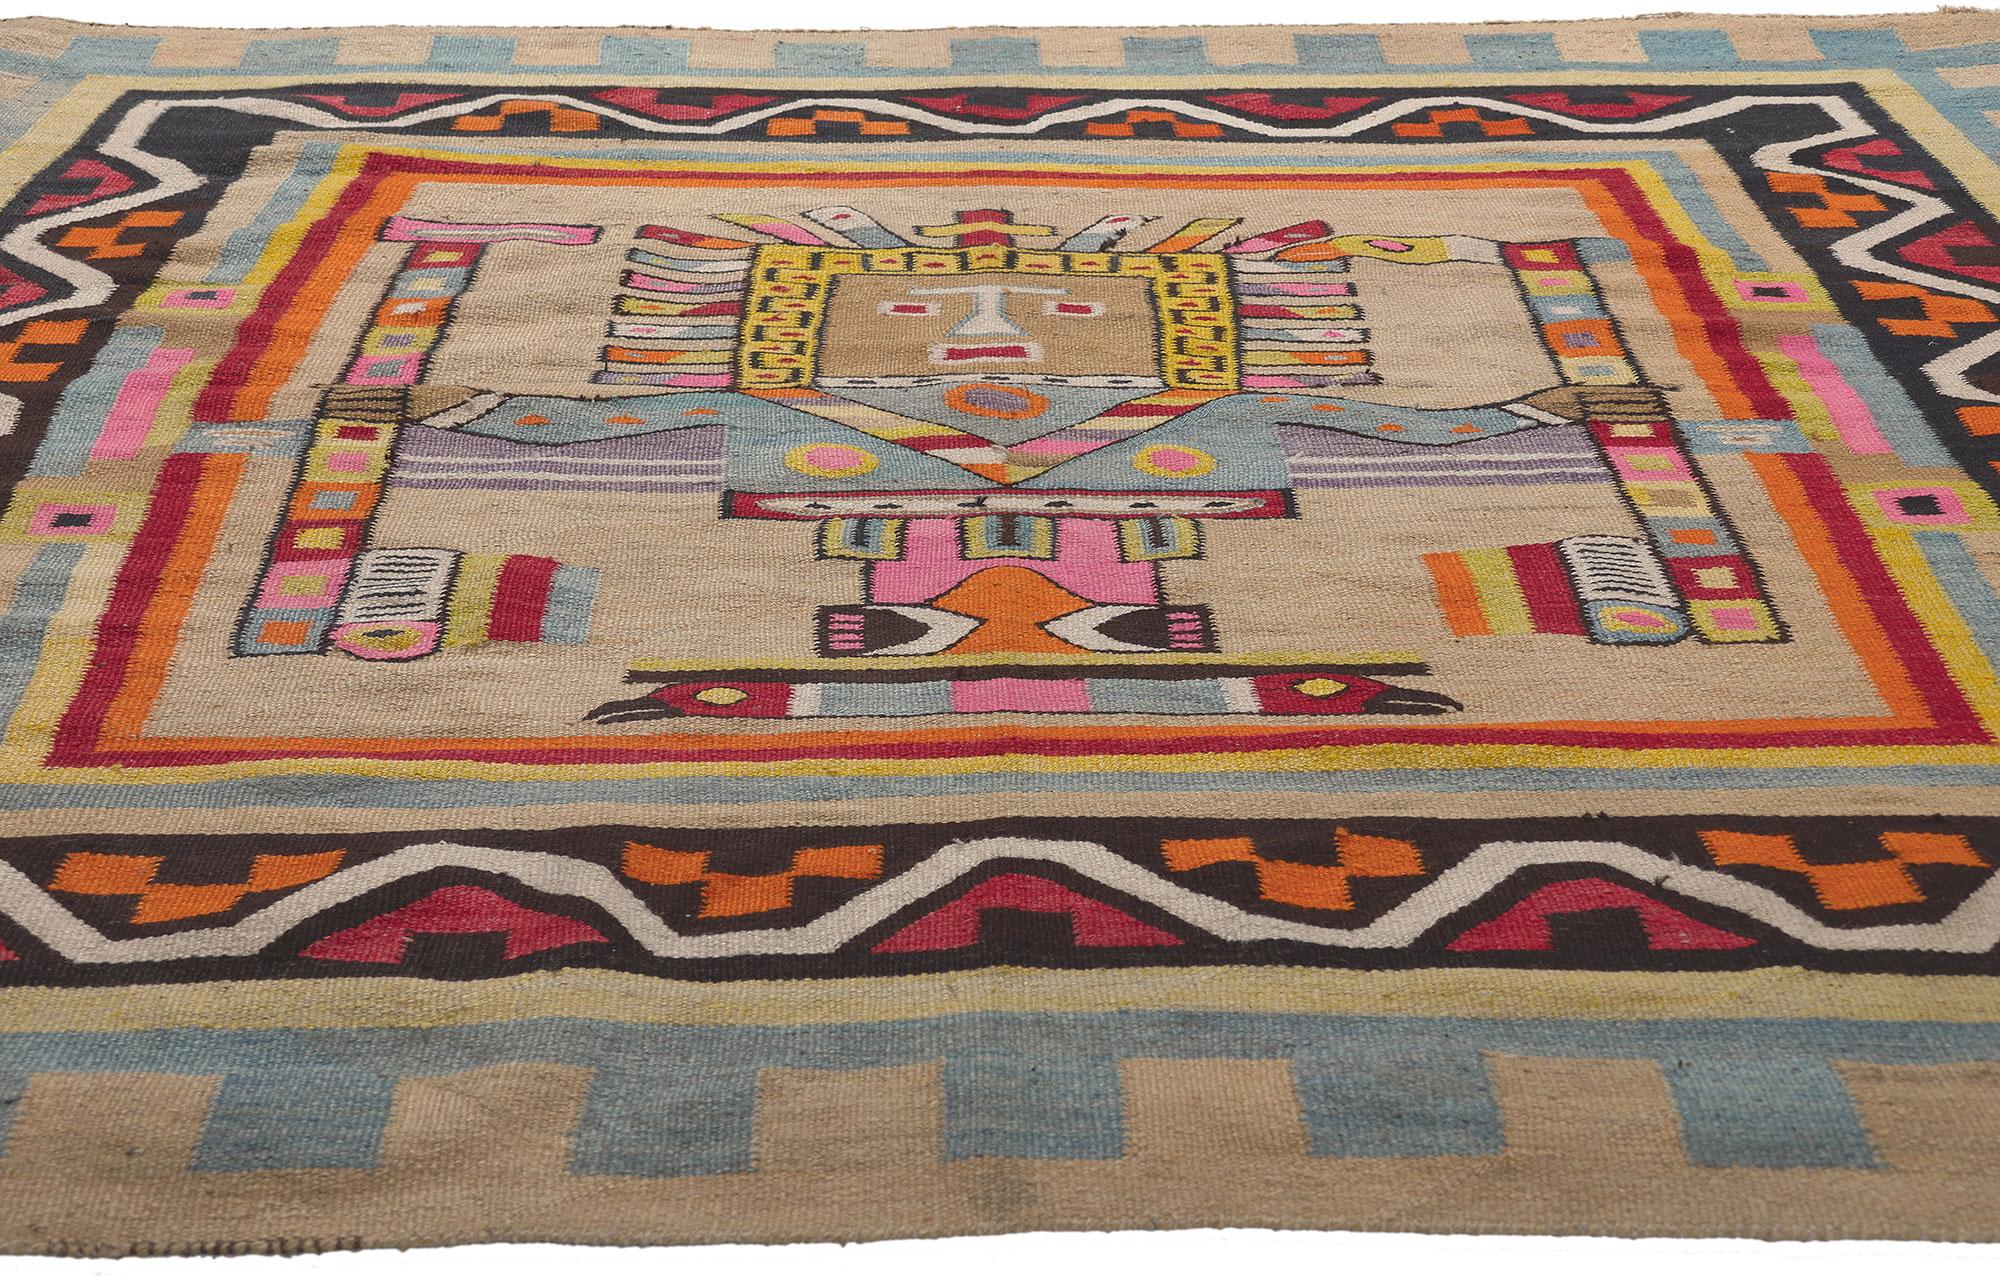 Pre-Columbian Colorful Vintage South American Kilim Rug with Pre-Incan Viracocha Deity 